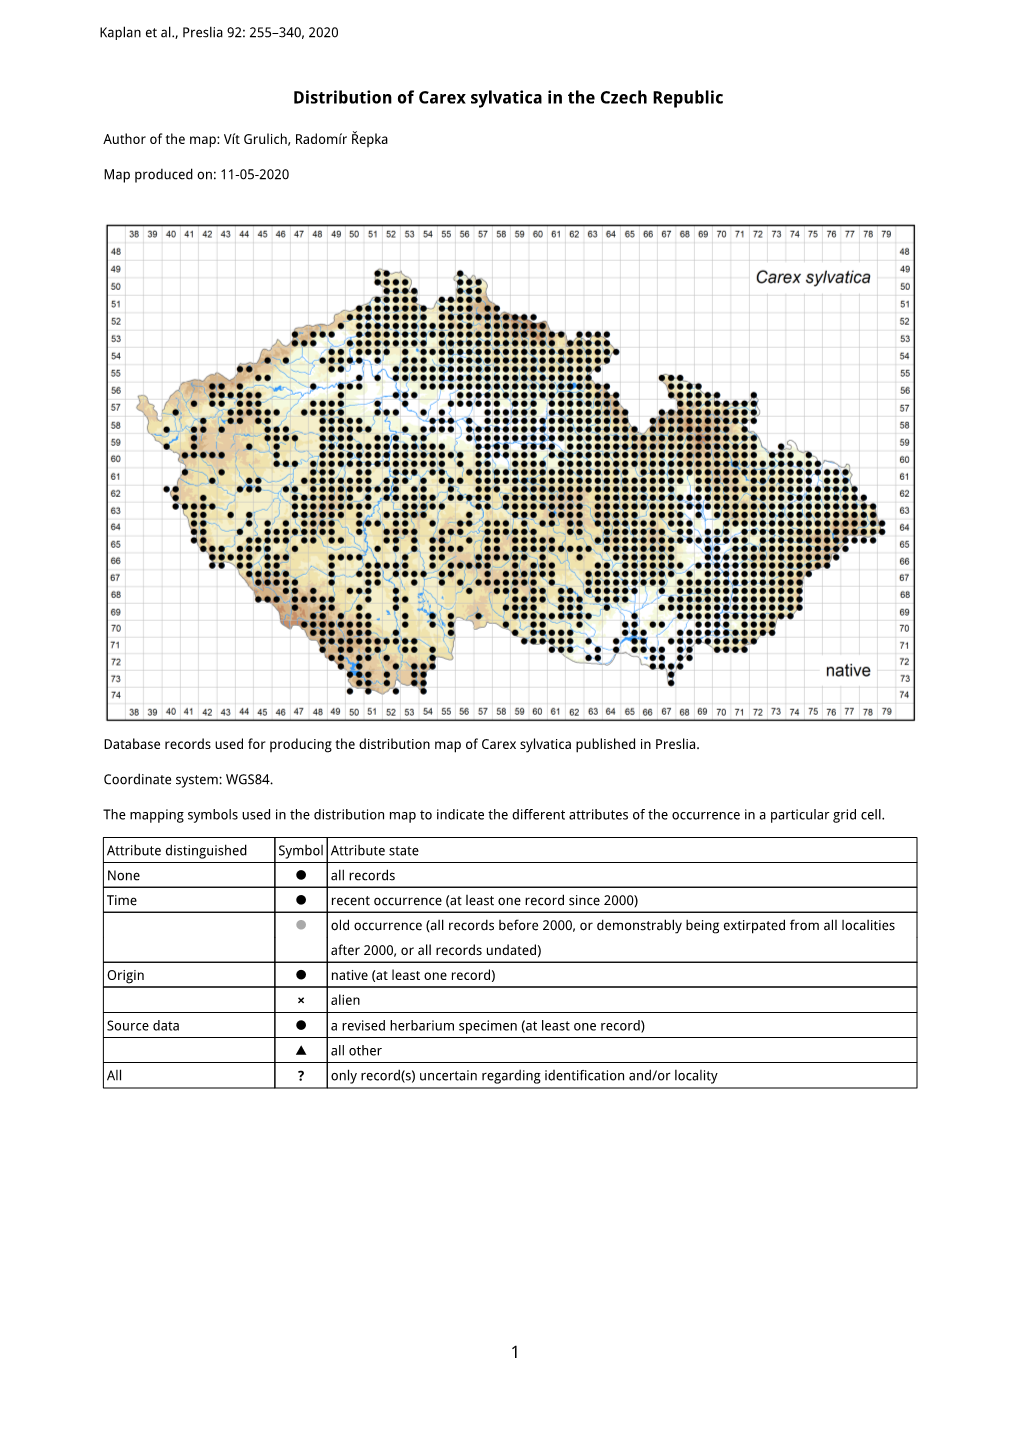 1 Distribution of Carex Sylvatica in the Czech Republic